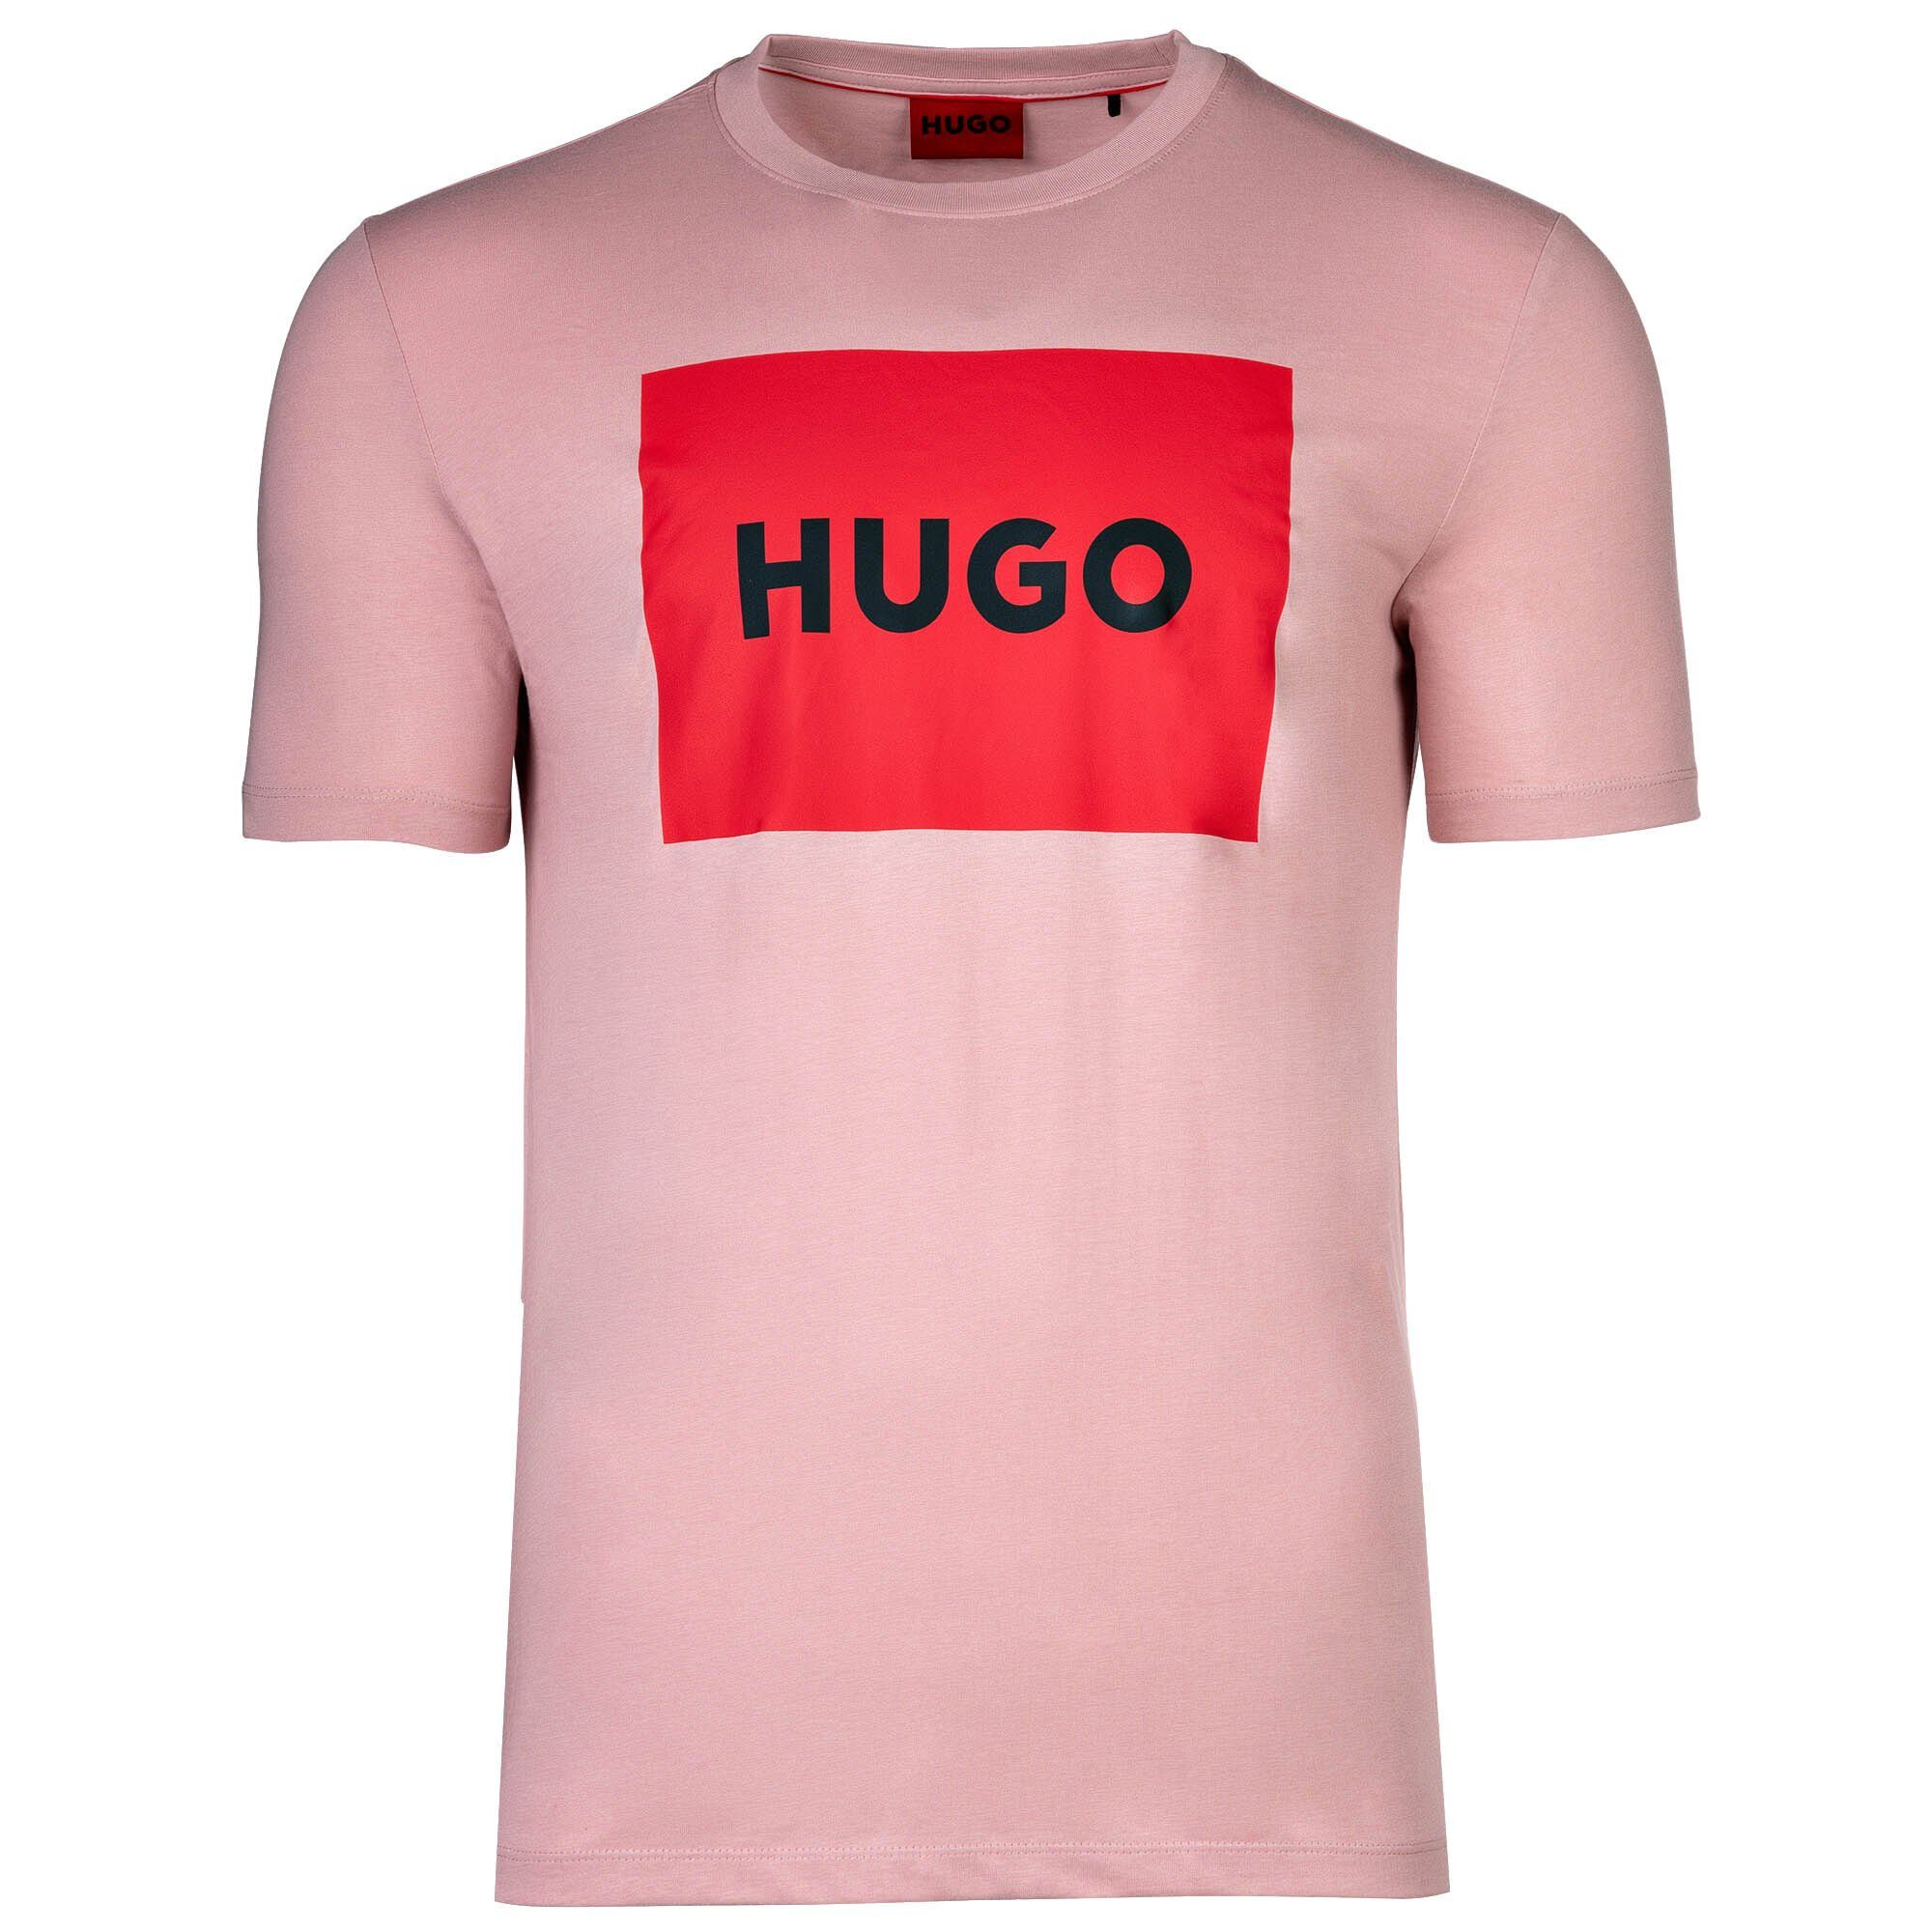 HUGO T-Shirt Herren T-Shirt - Dulive222, Rundhals, Kurzarm Rosa (Pastel Pink)